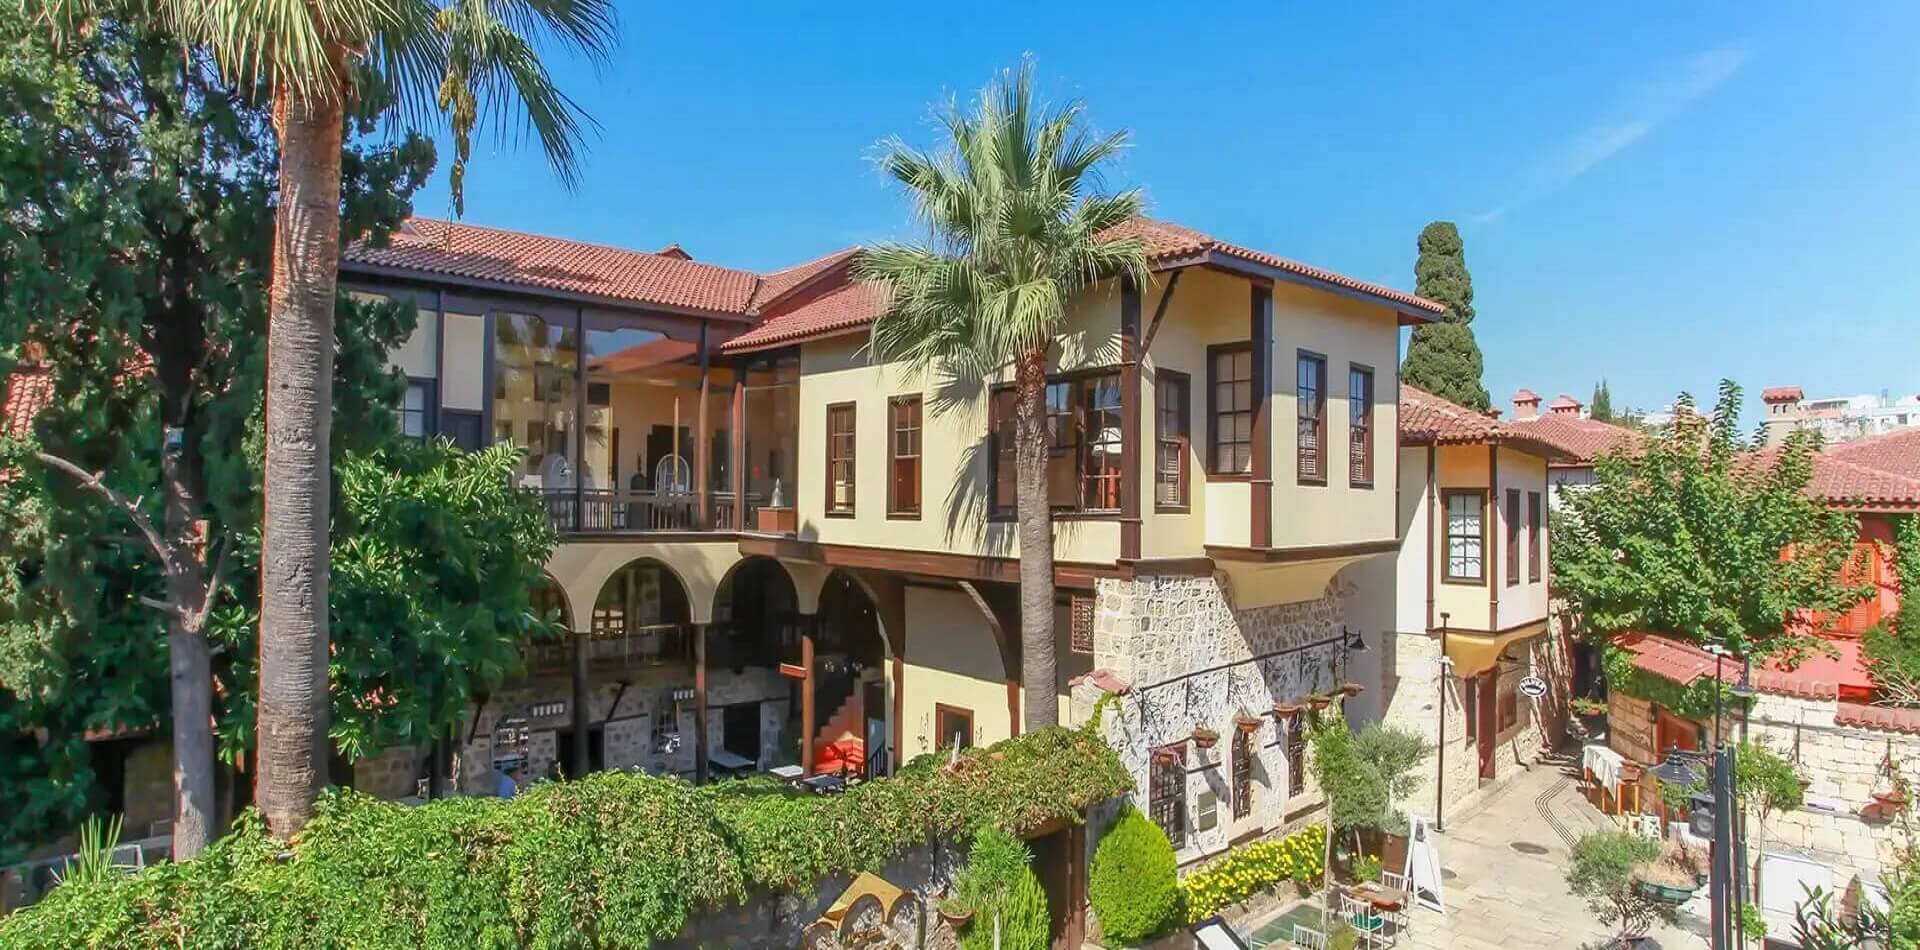 Sıradışı Otel Deneyimi Alp Paşa Hotels